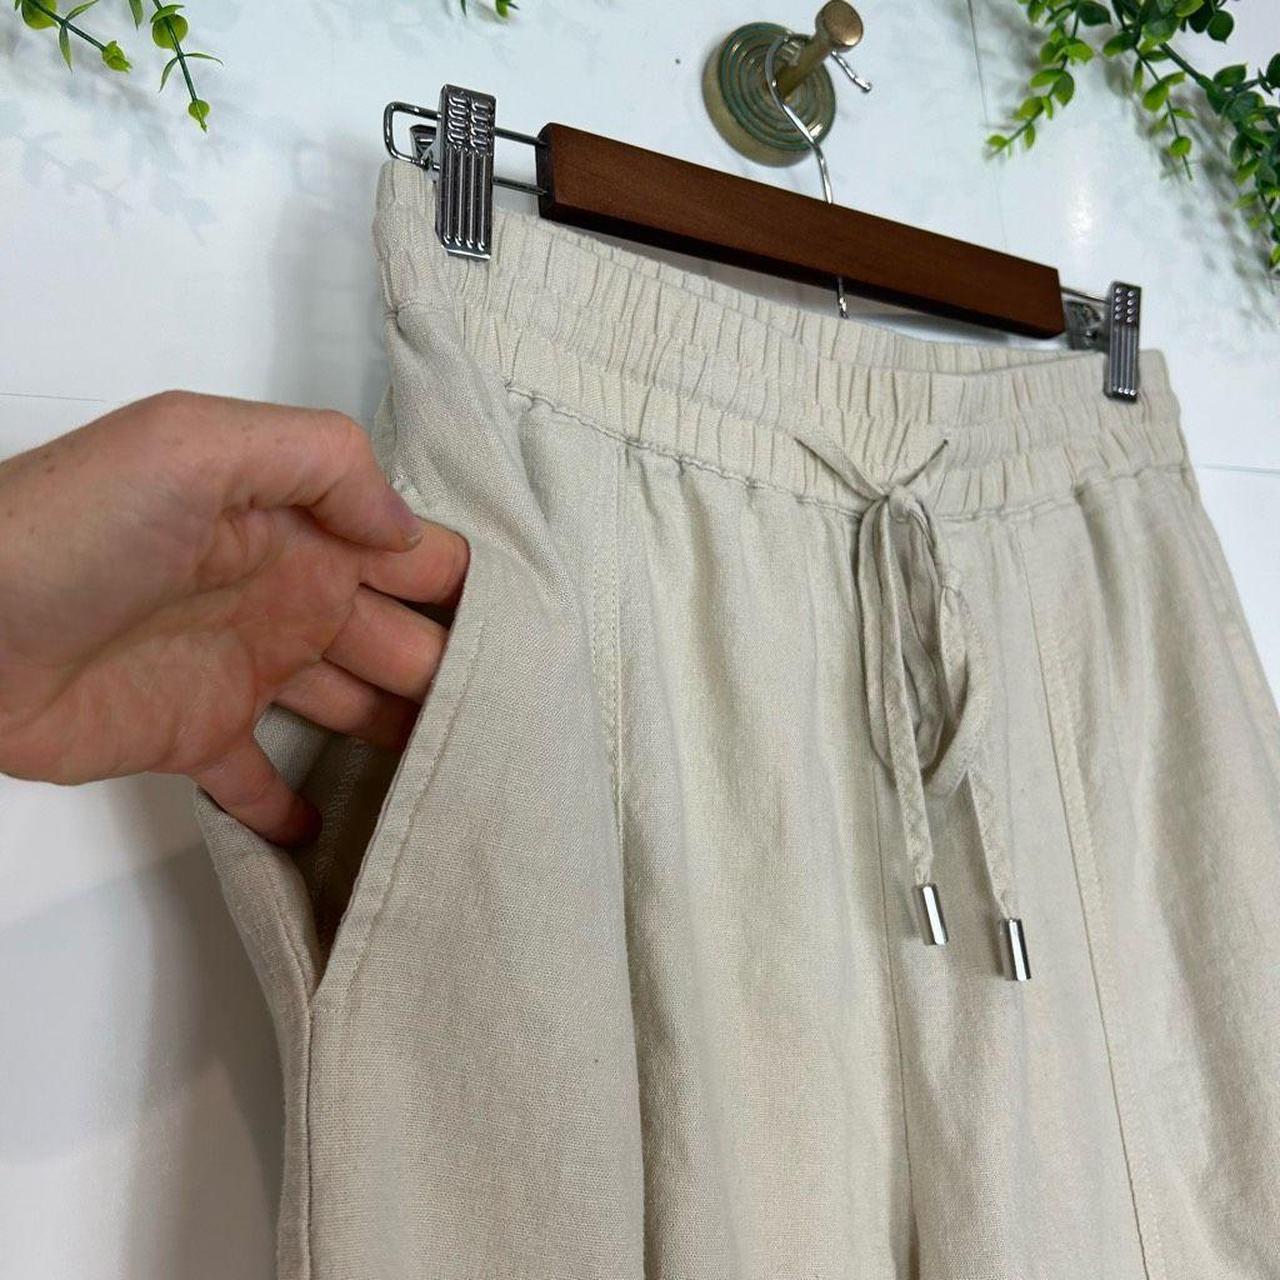 ZARA Carrot Fit Linen Blend Trousers Sizes: XS S M L XL Price: MVR 750  Description: High-waist trousers made of a linen blend. Side pock